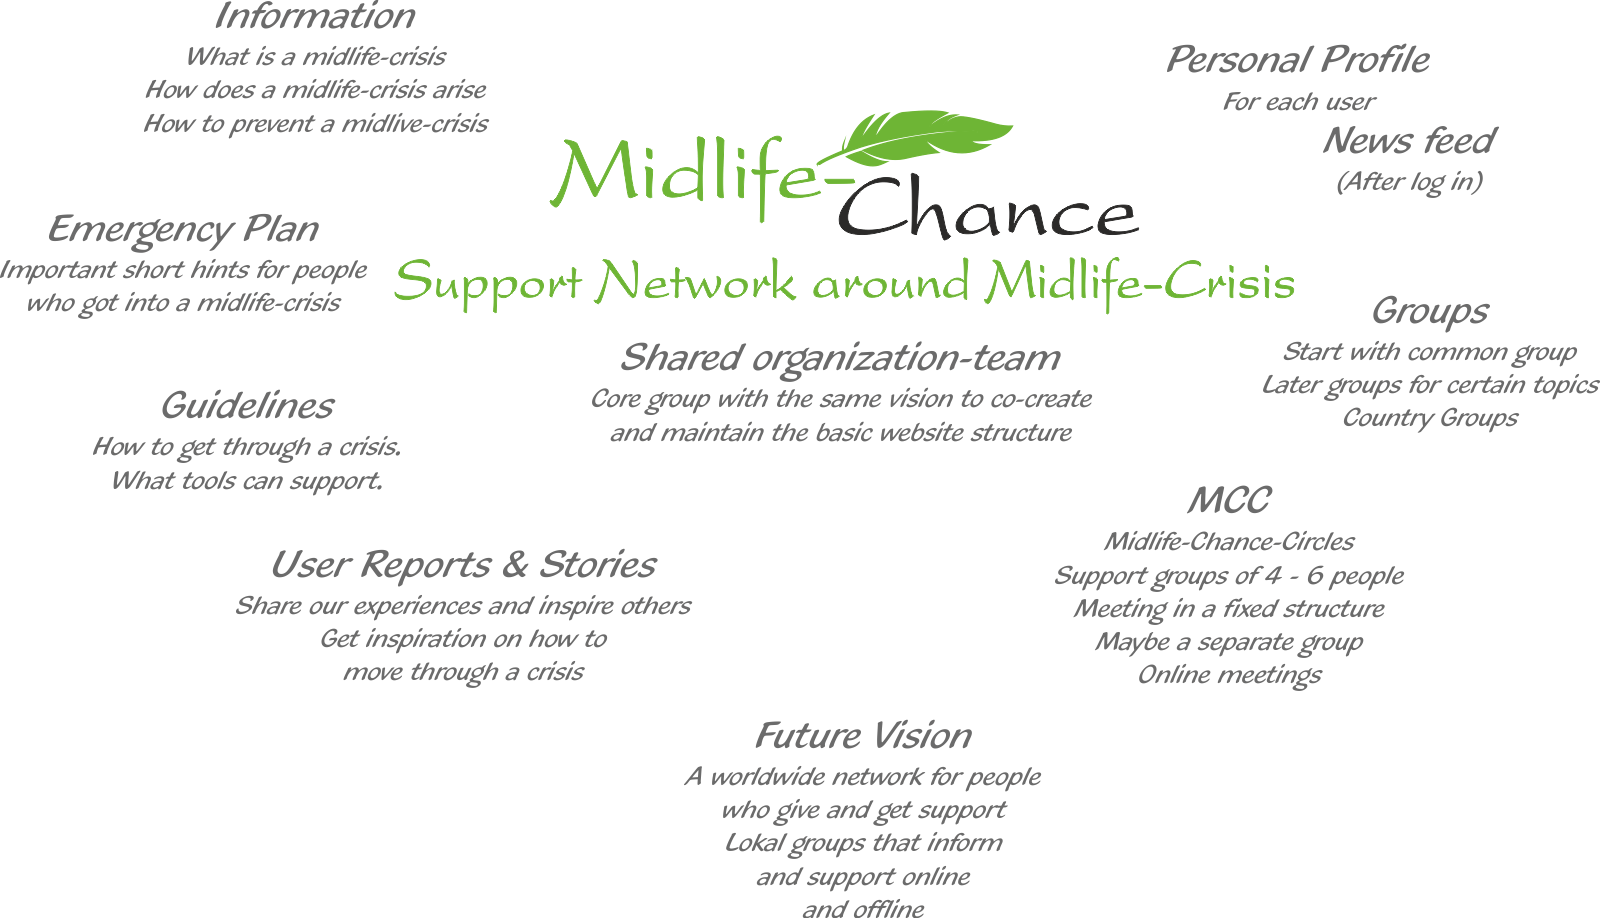 Midlife-Chance member benefits